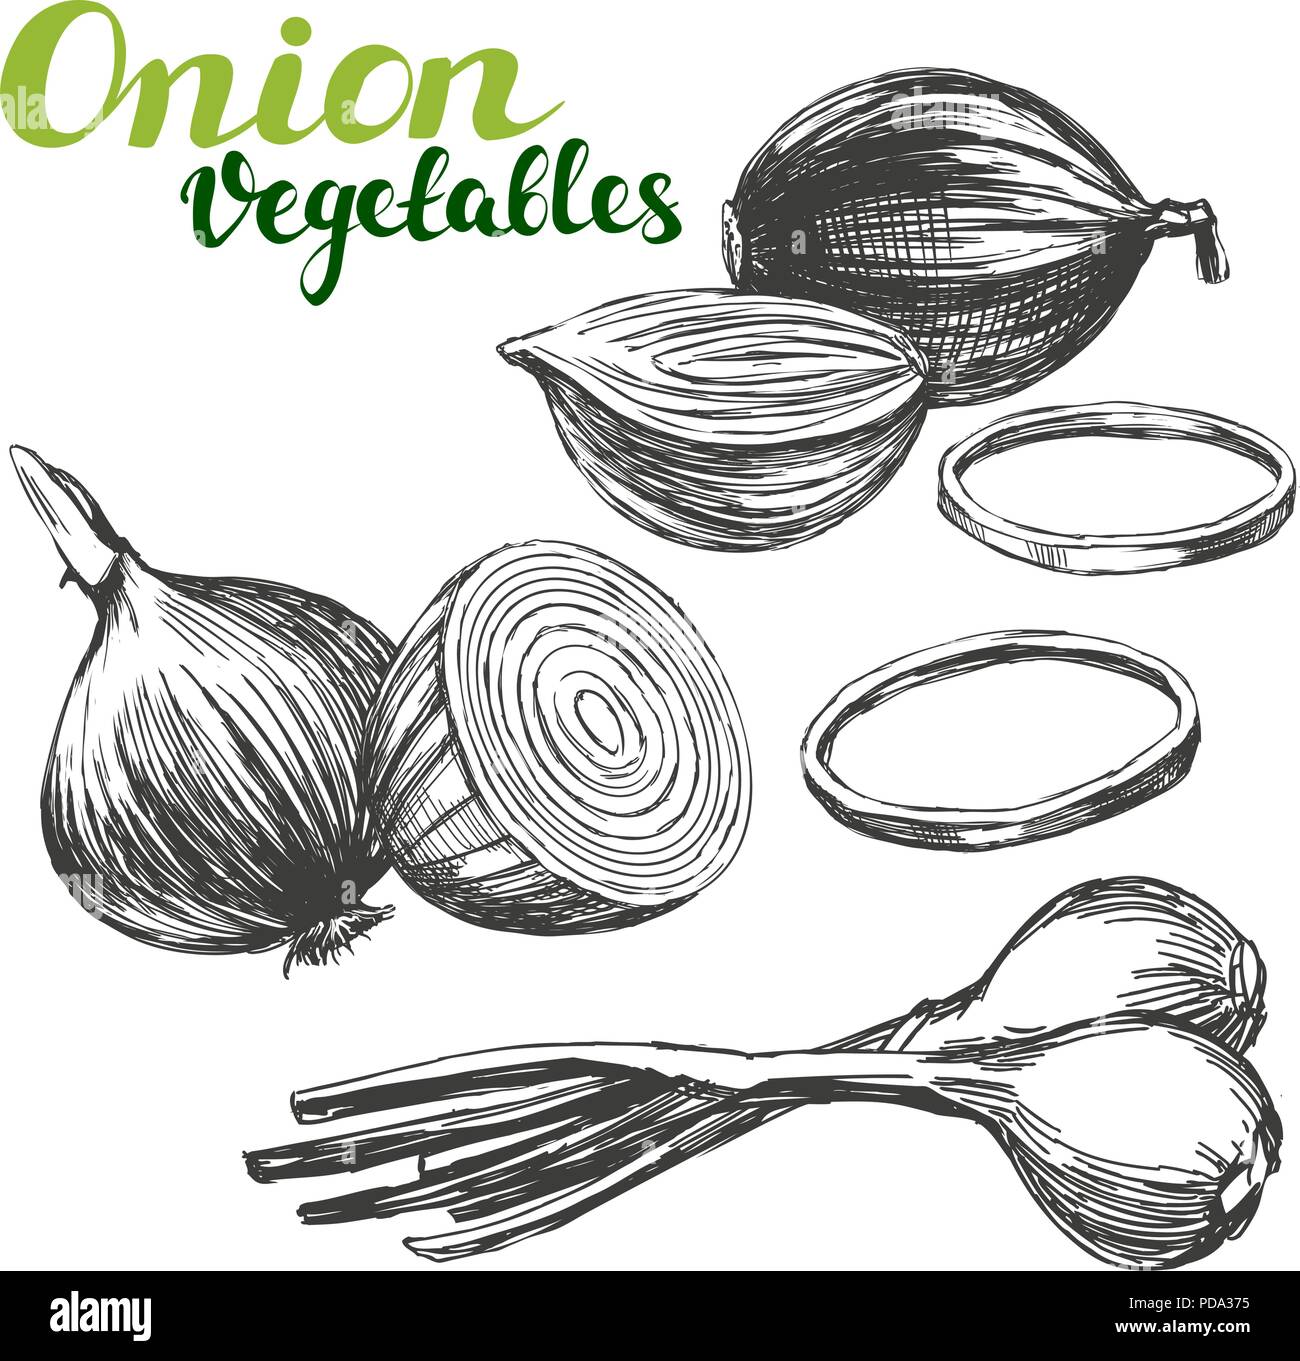 onion vegetable set hand drawn vector illustration realistic sketch Stock Vector